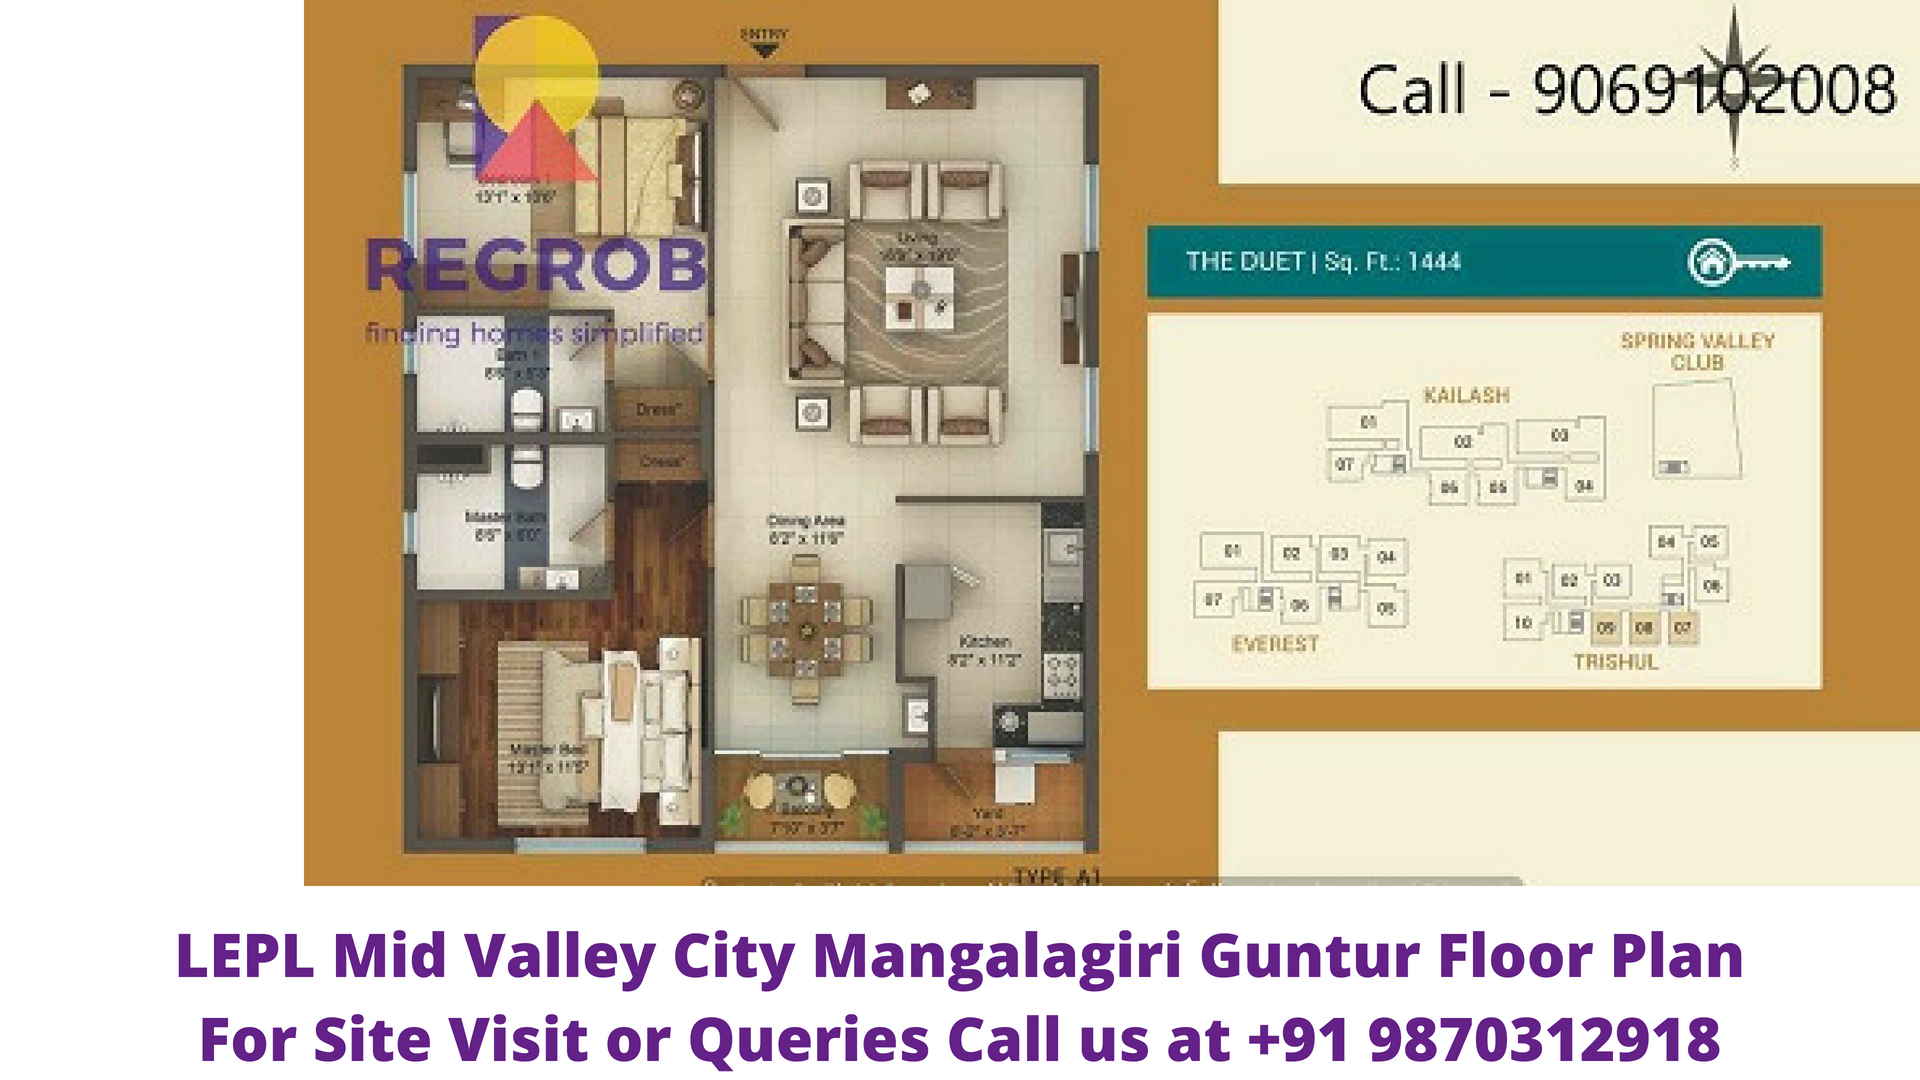 LEPL Mid Valley City Mangalagiri Guntur